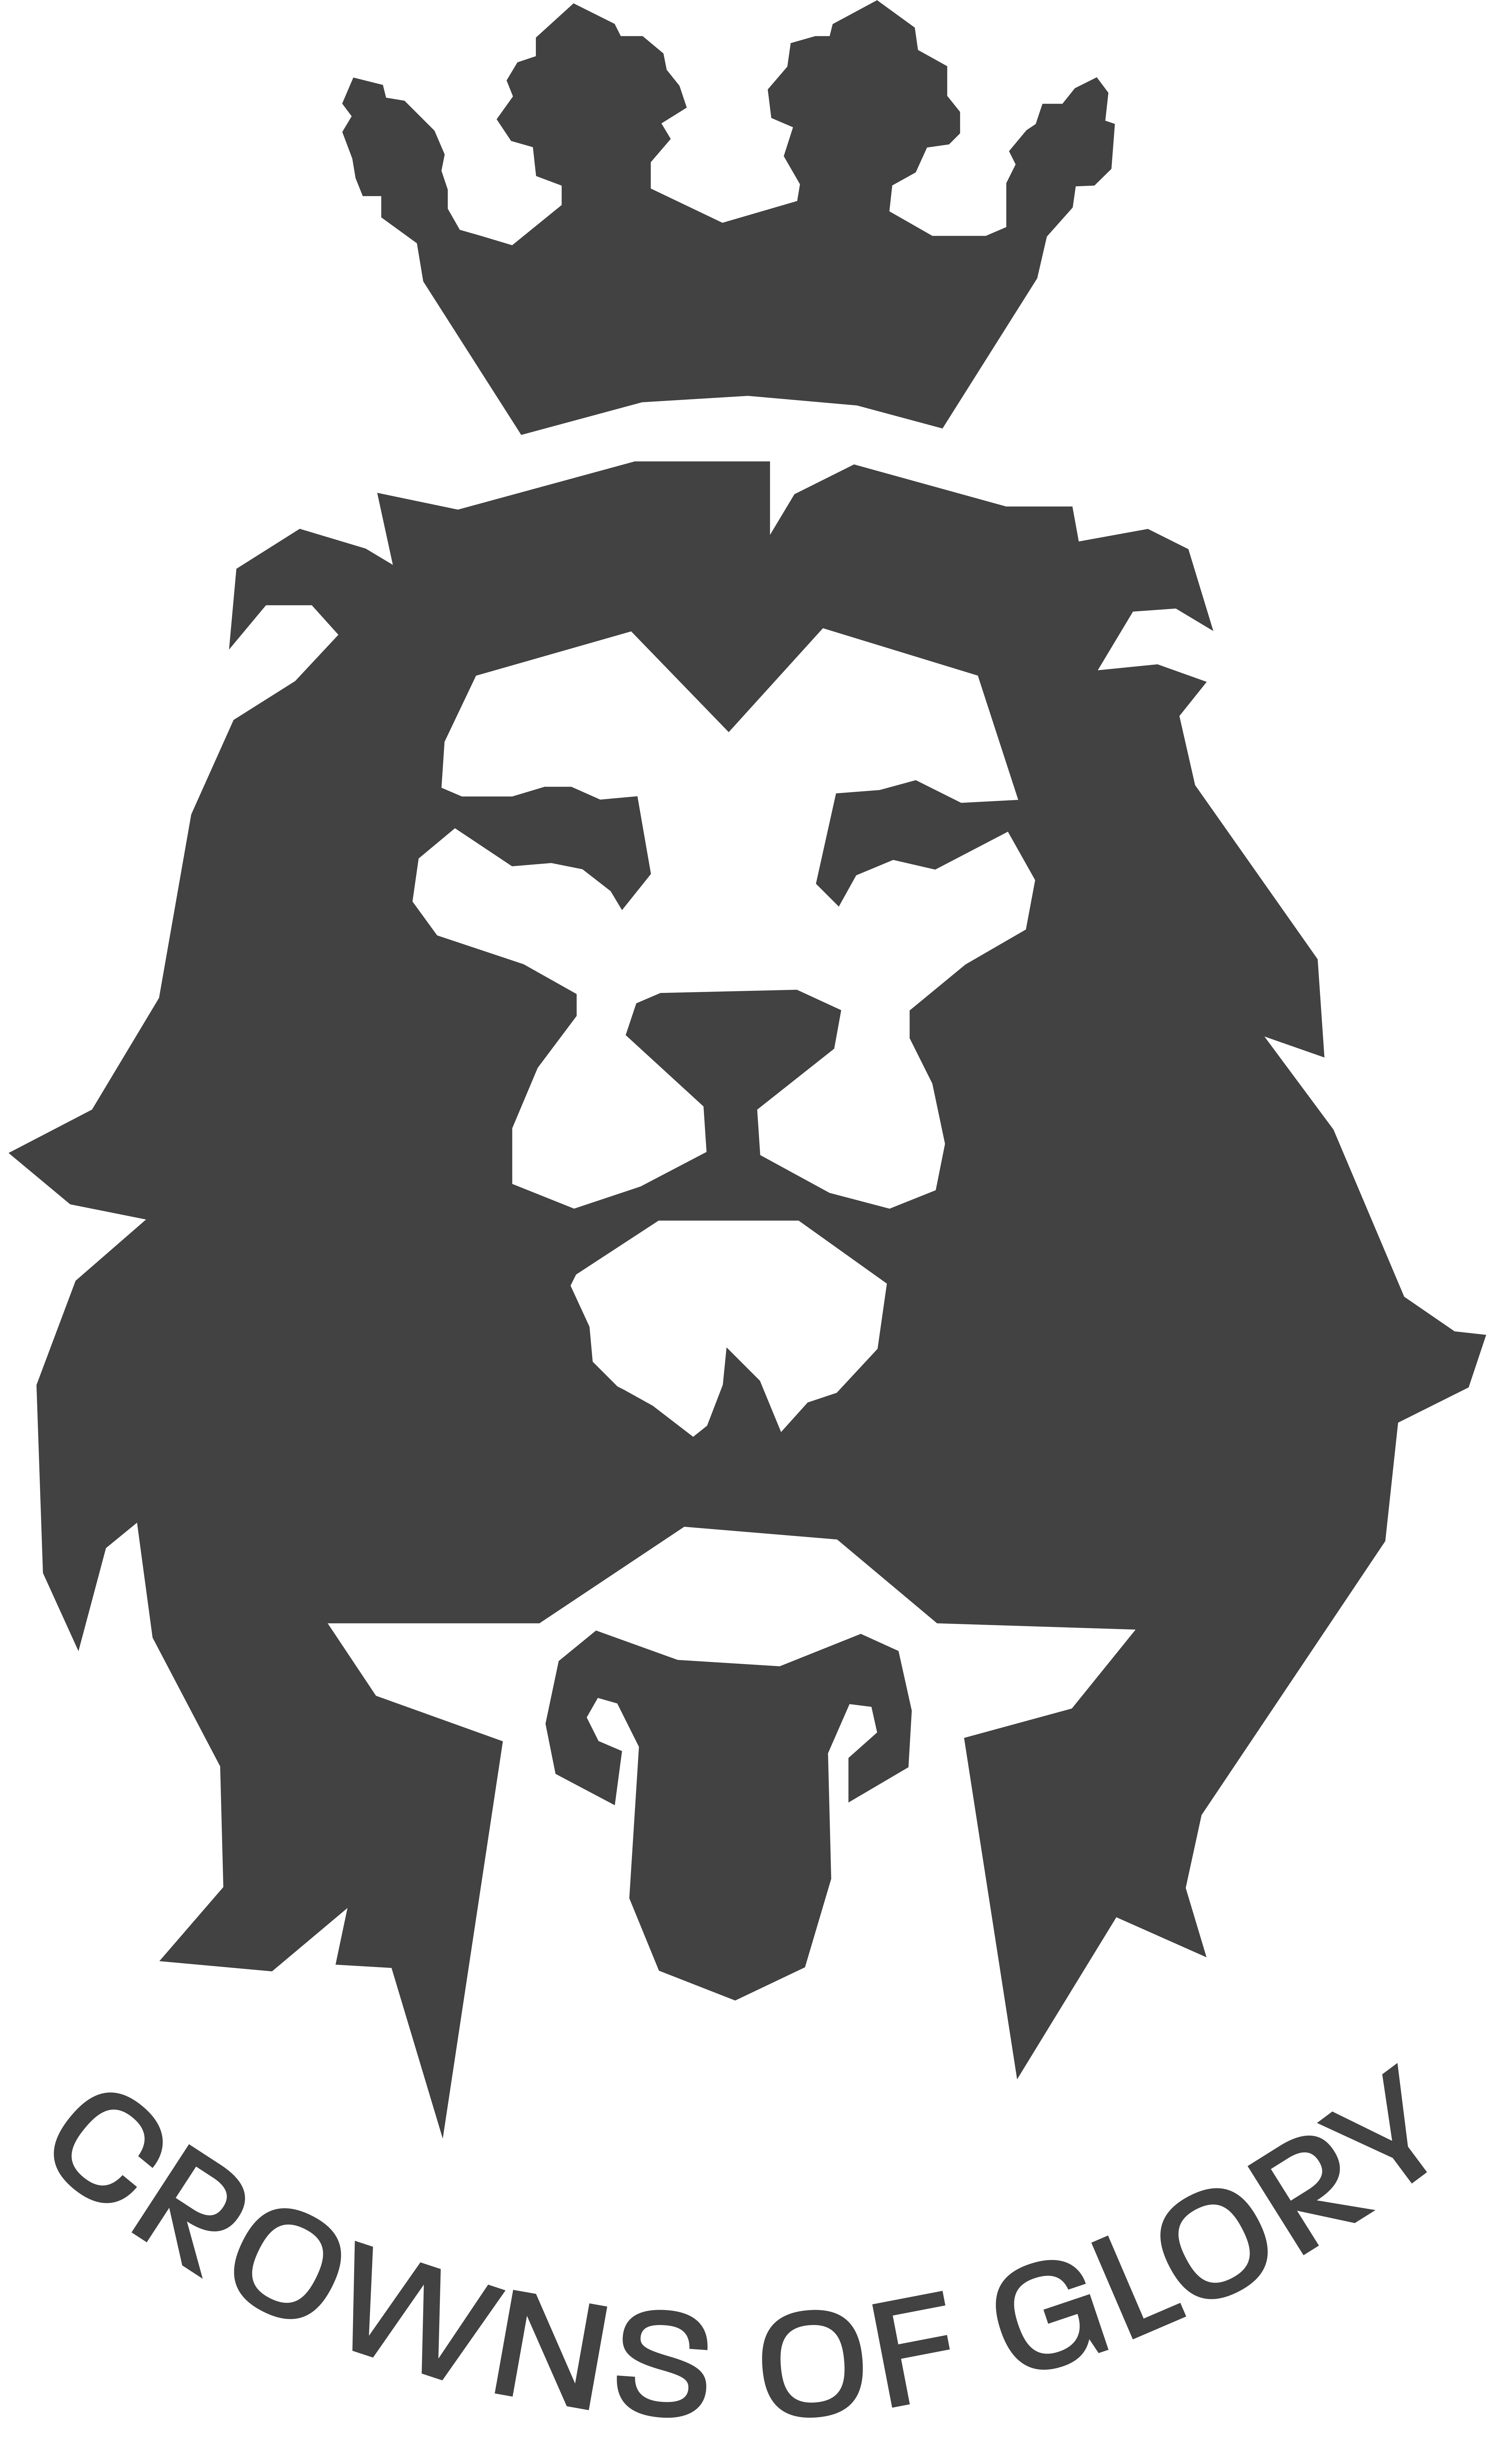 Logo Crowns of glory